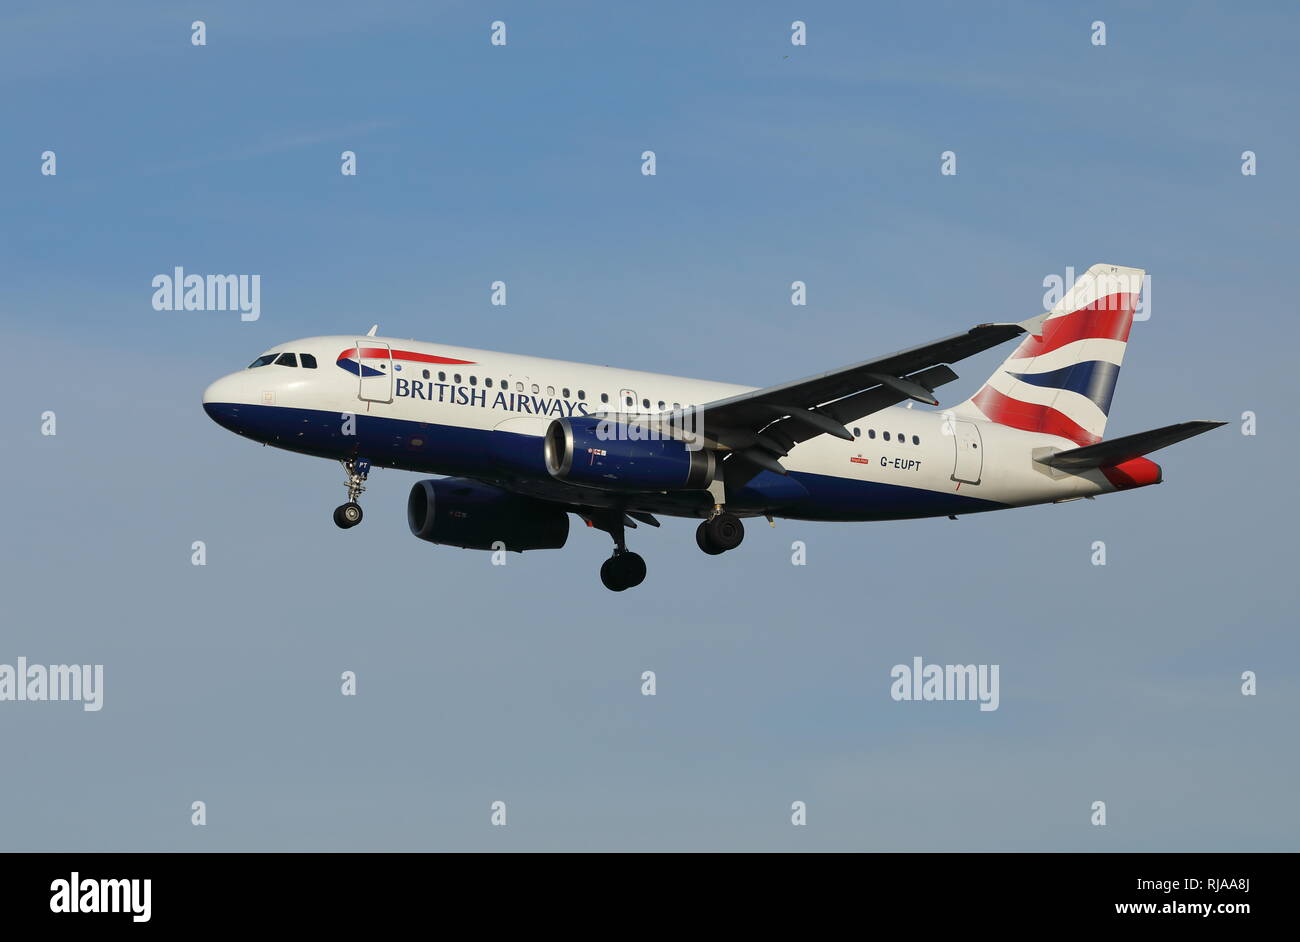 British Airways Airbus A319 aerei per il trasporto di passeggeri, reg. n. G-EUPT. Foto Stock